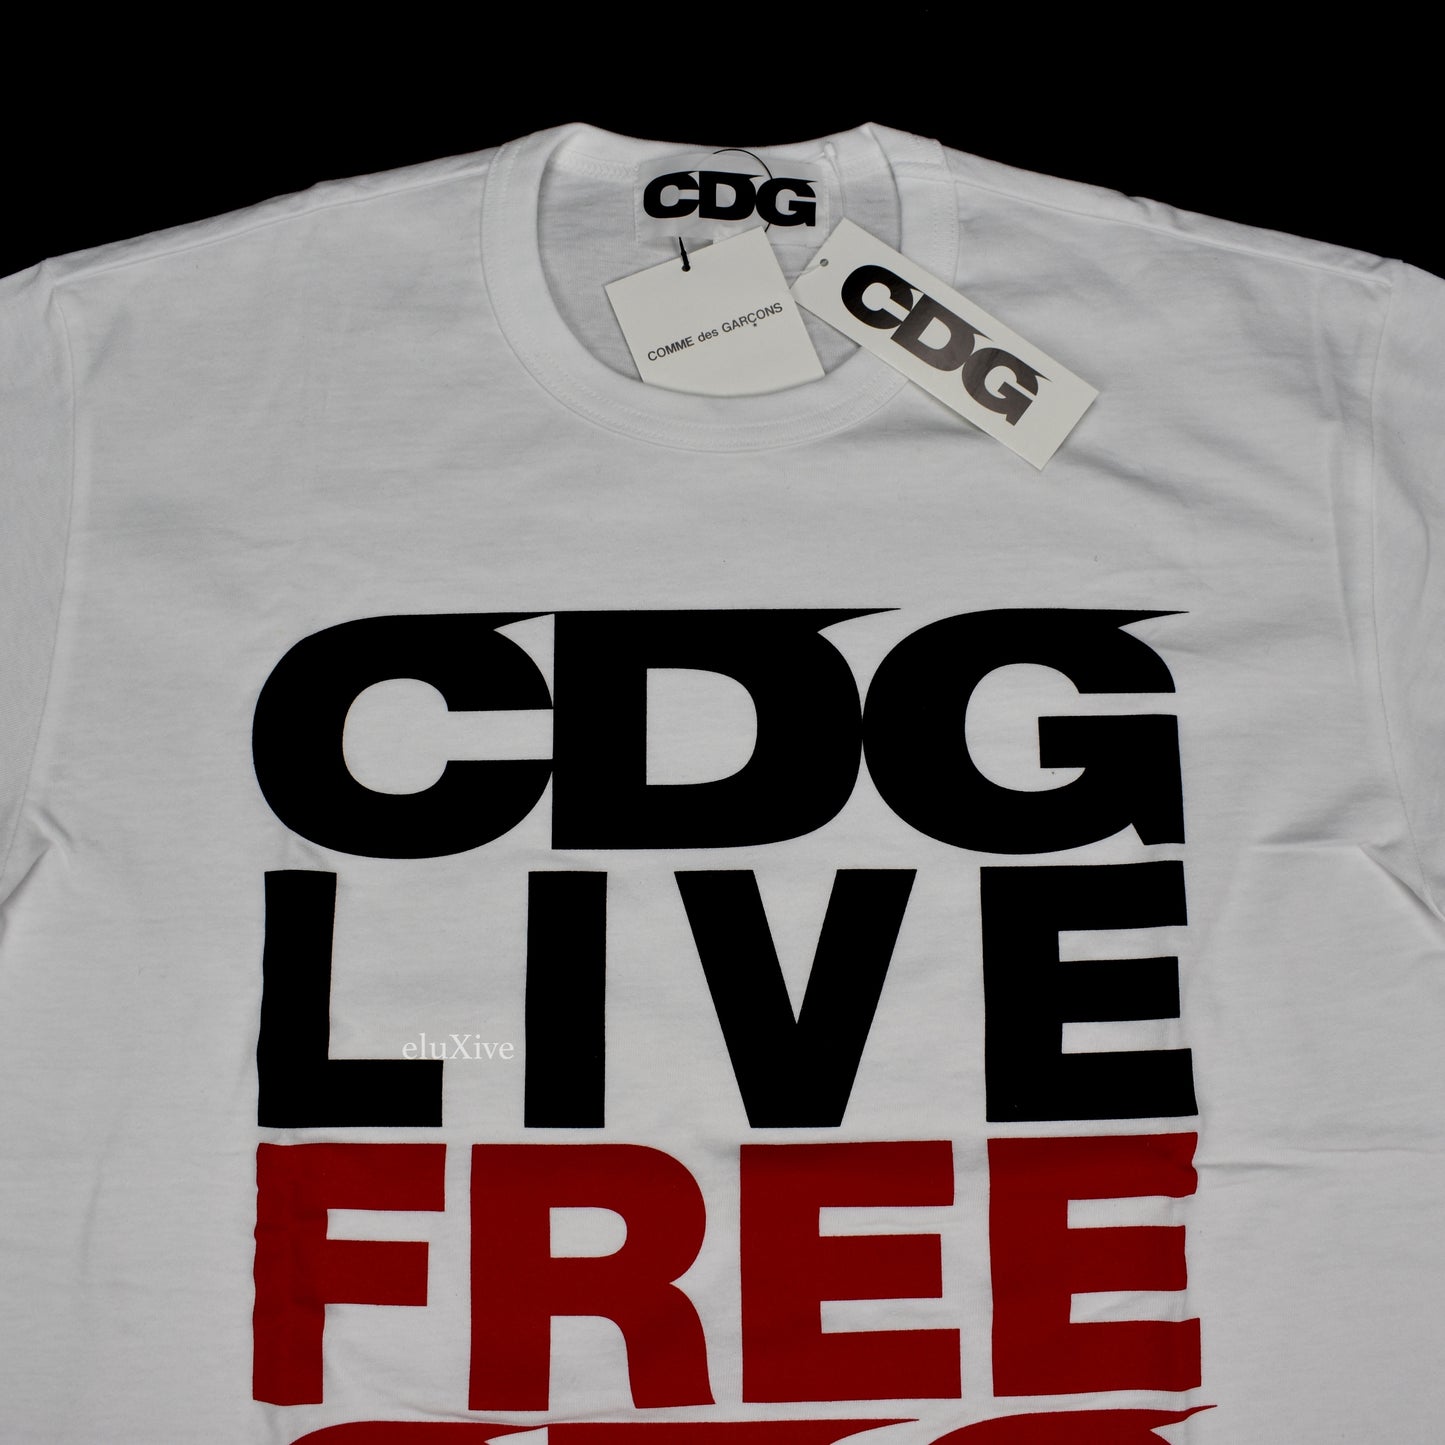 Comme des Garcons - CDG Live Free Logo T-Shirt